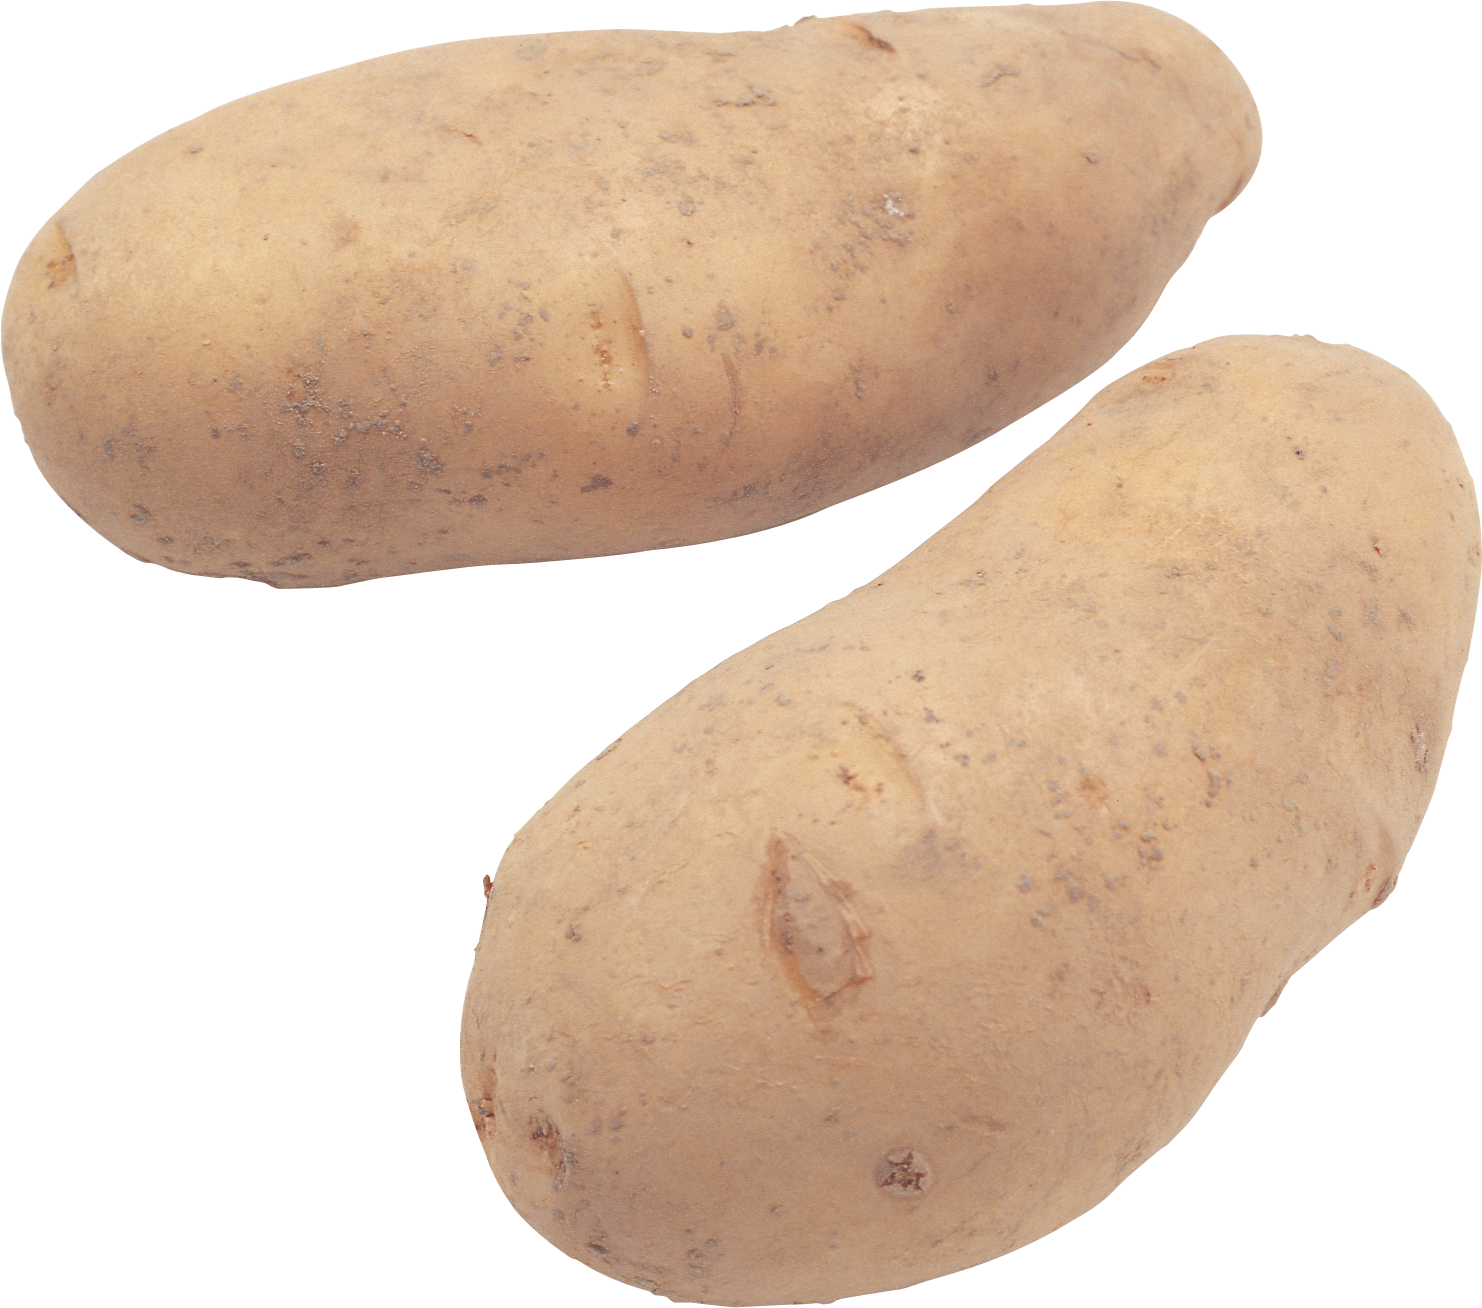 potato clipart root crop